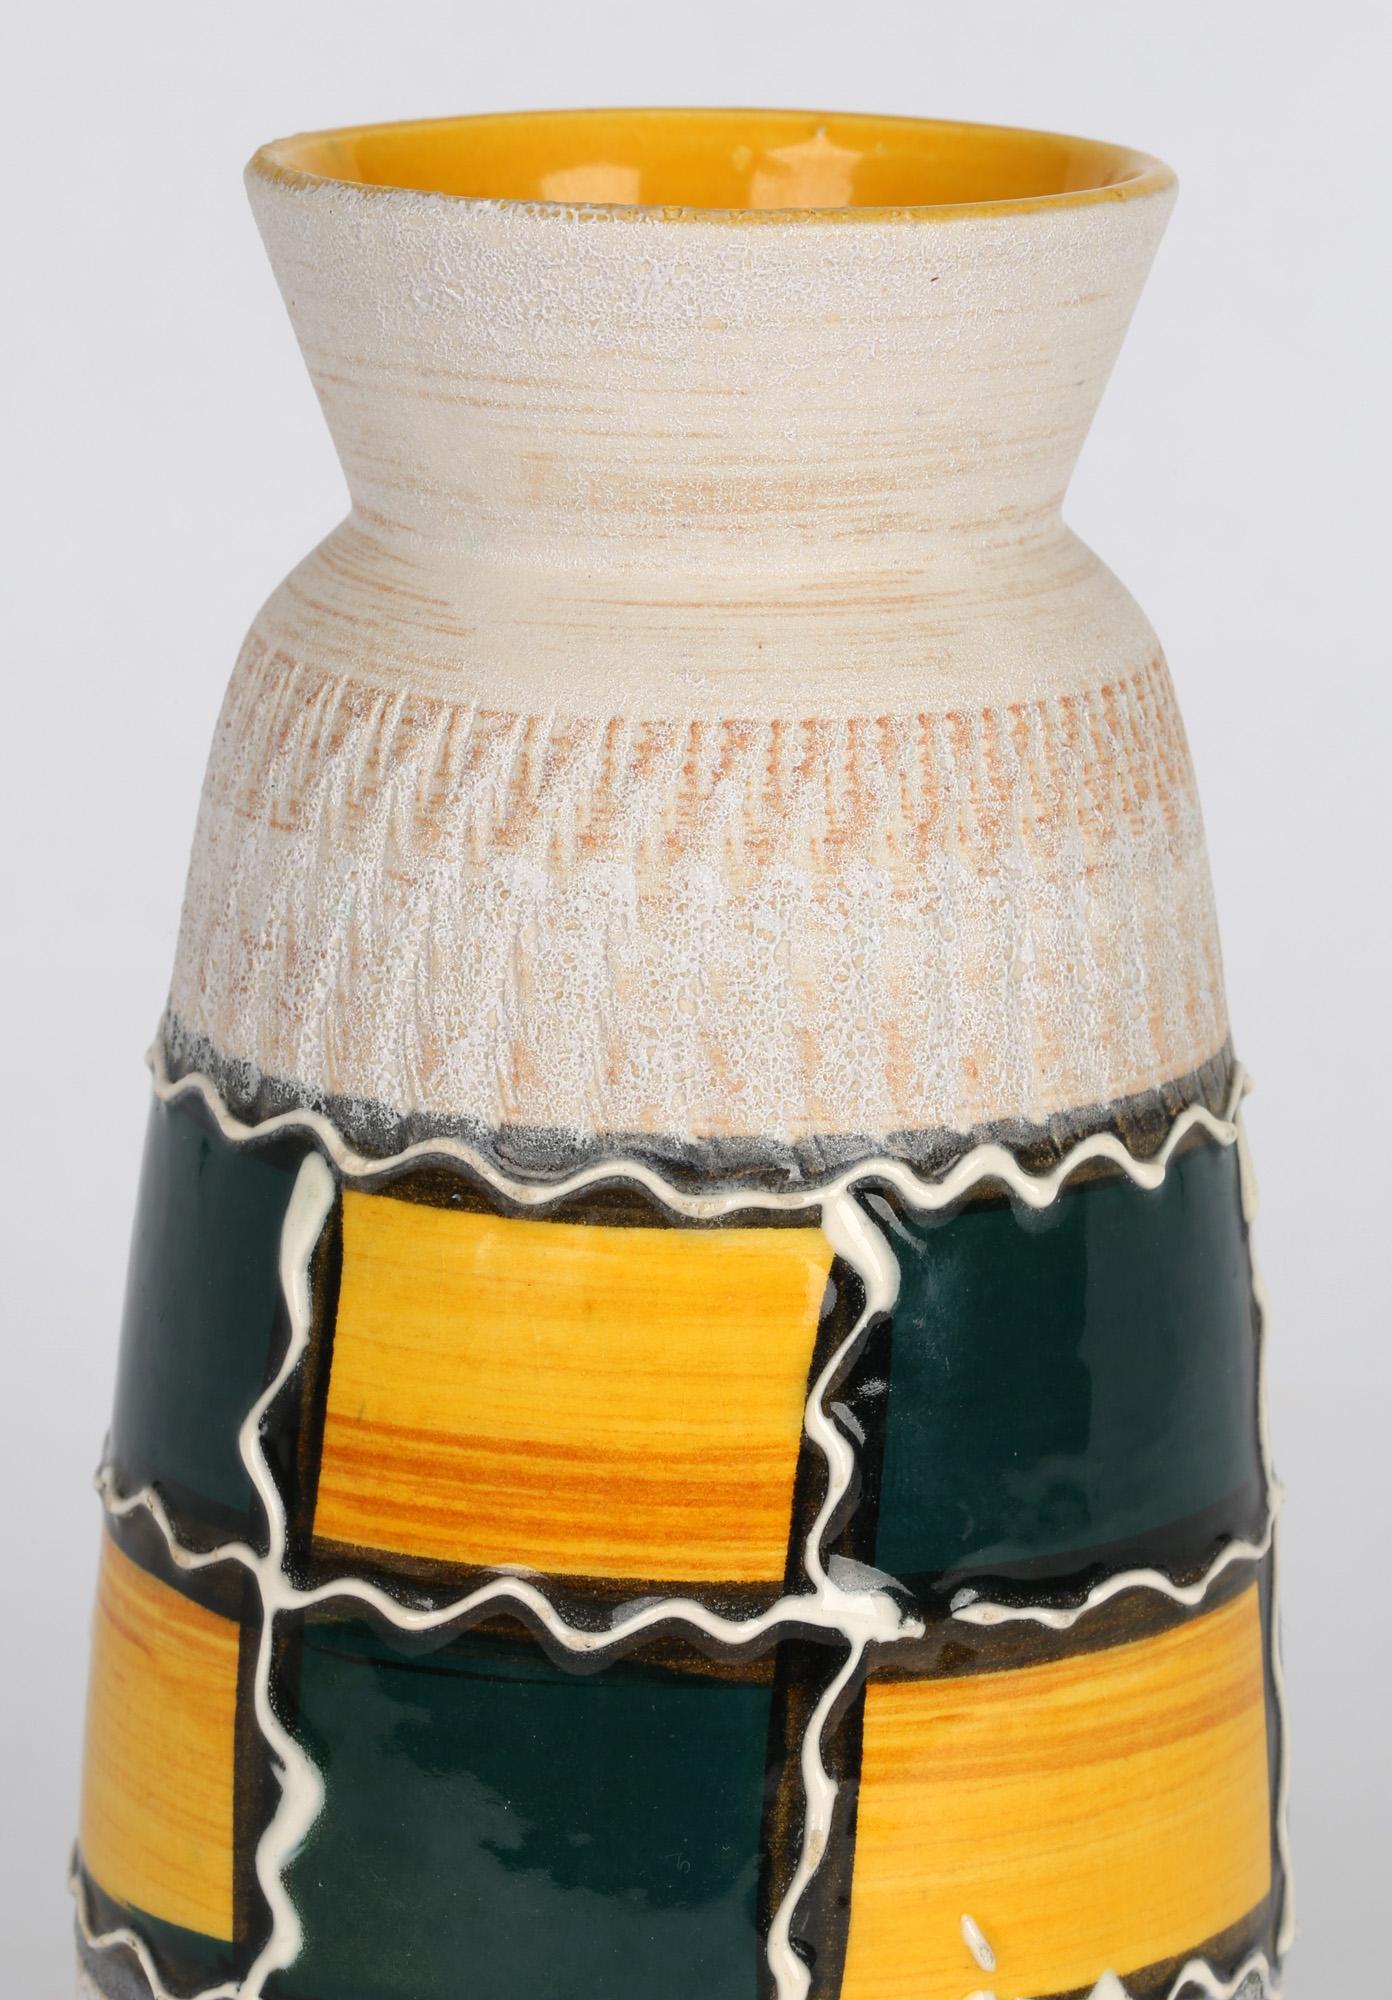 Scheurich West German Mid-Century Hand Painted Art Pottery Vase For Sale 6